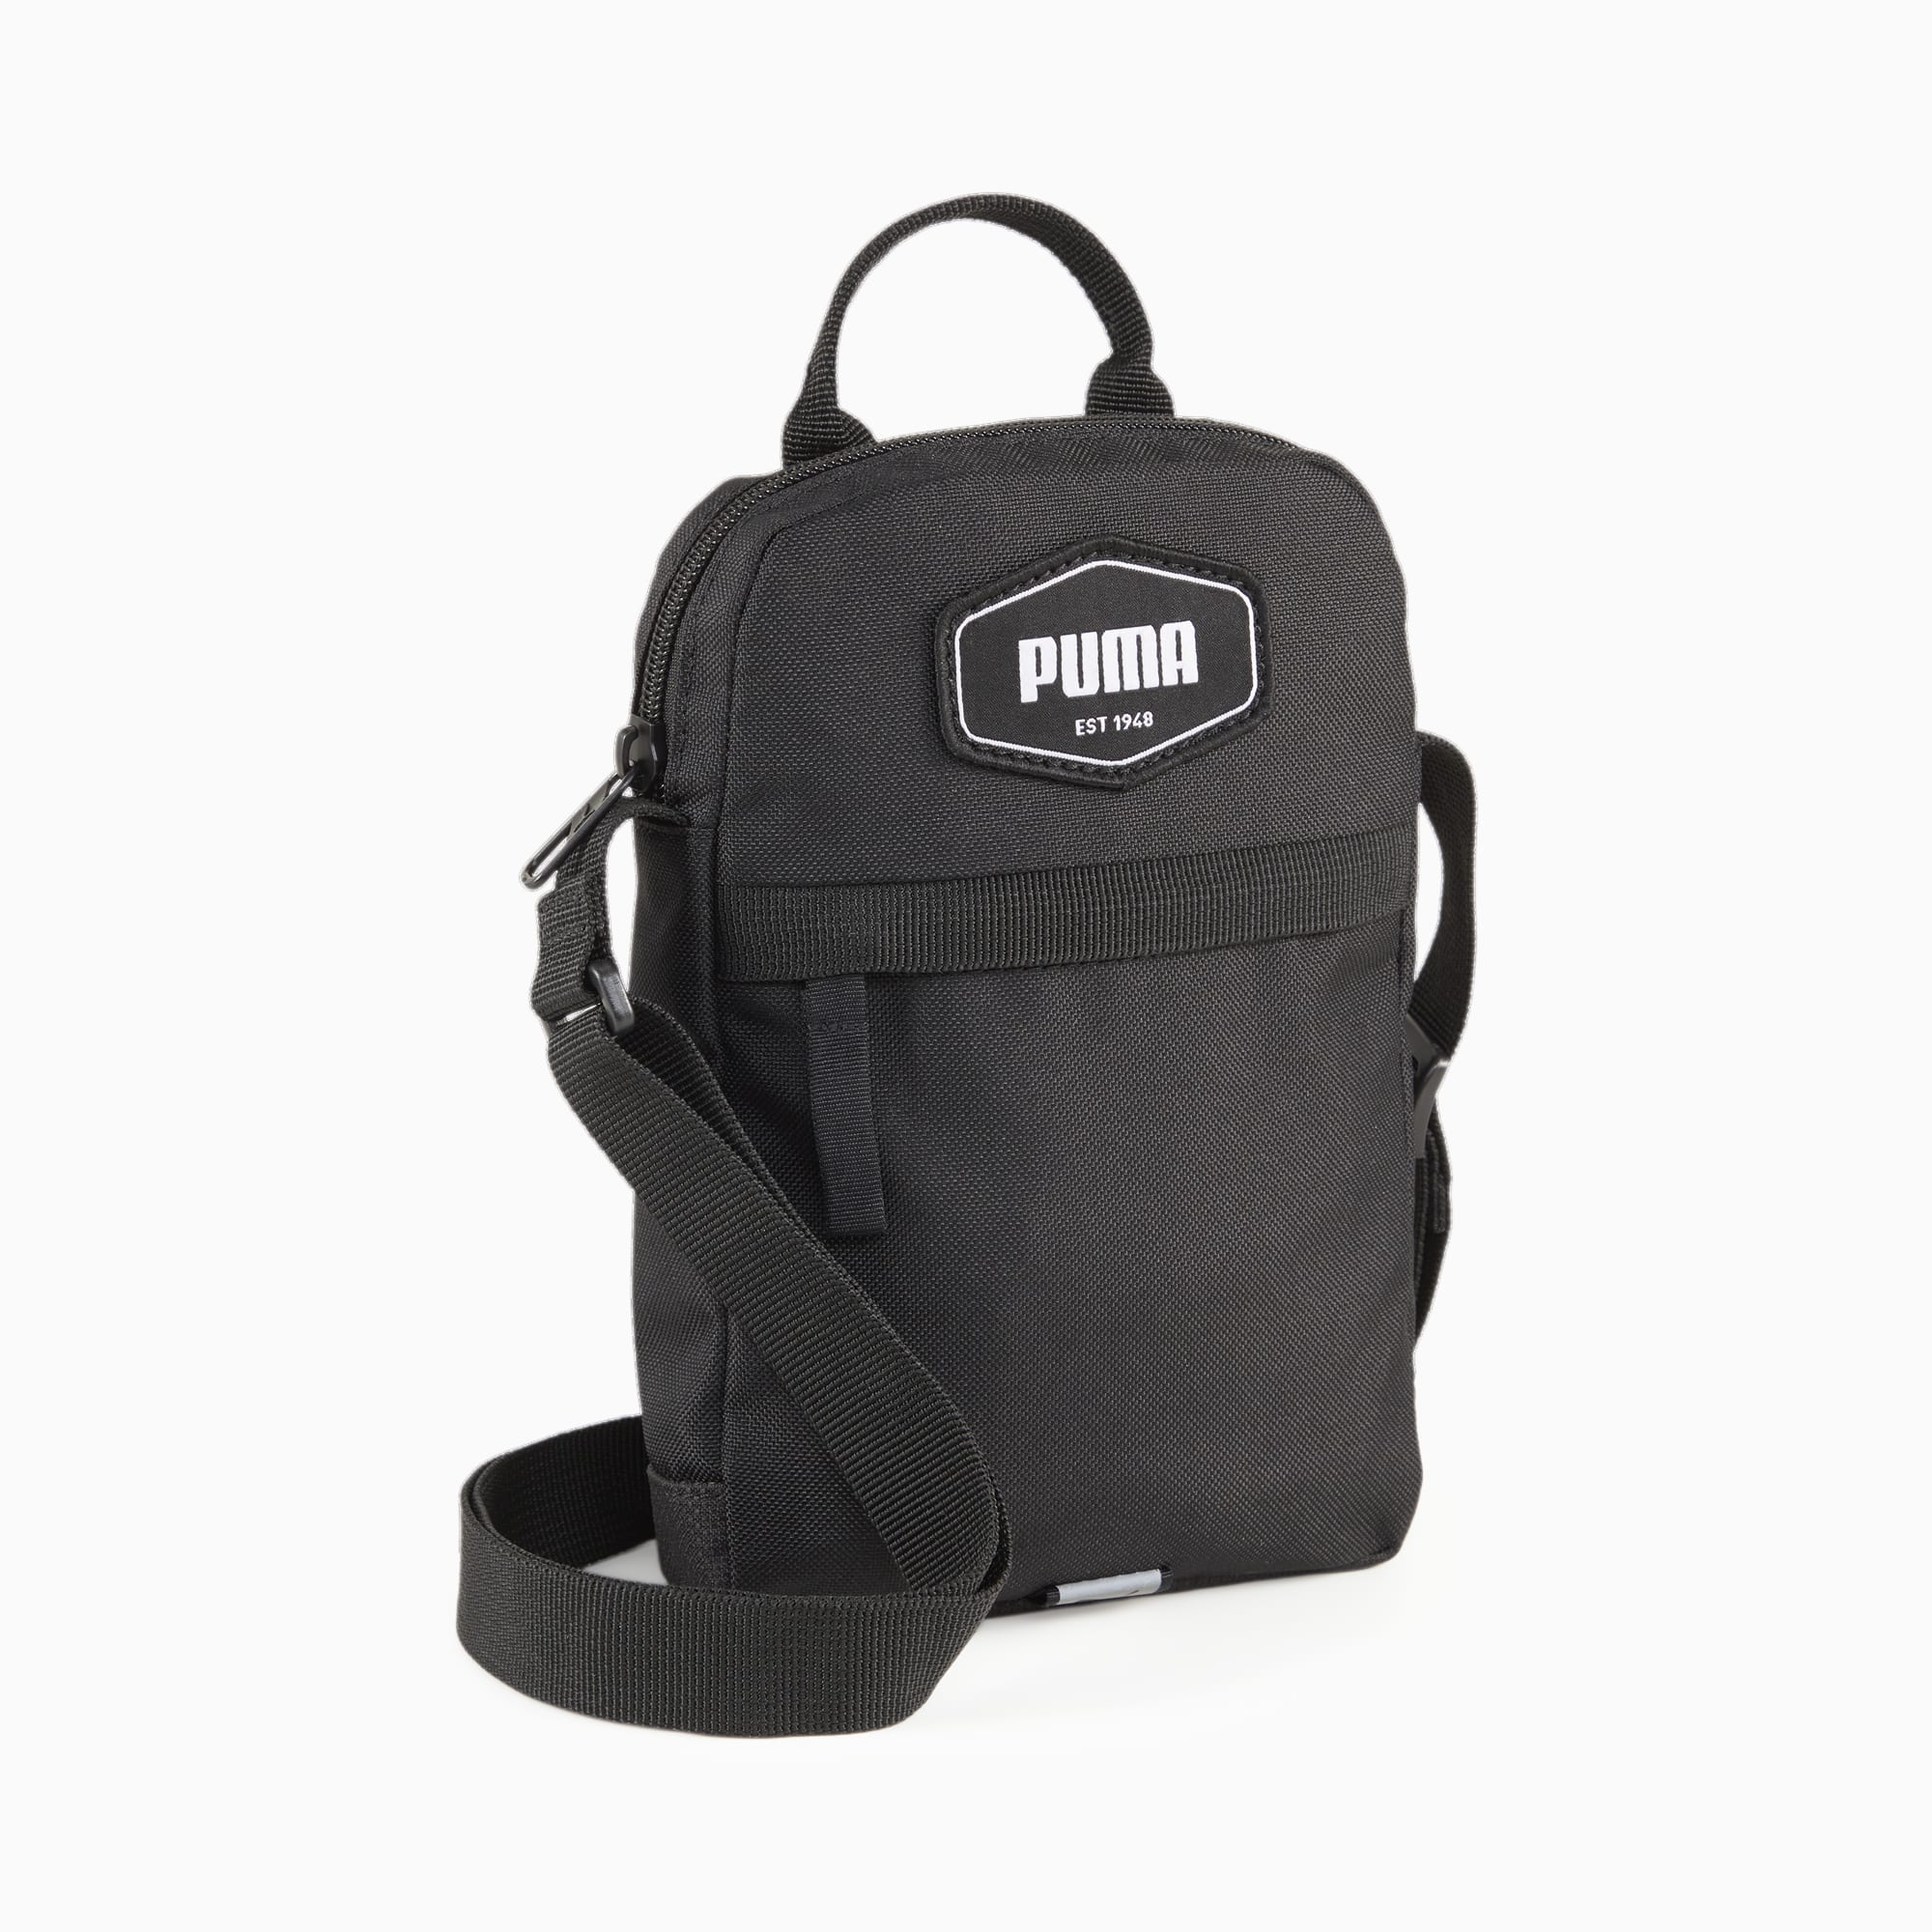 Women's PUMA Deck Portable Bag, Black, Accessories